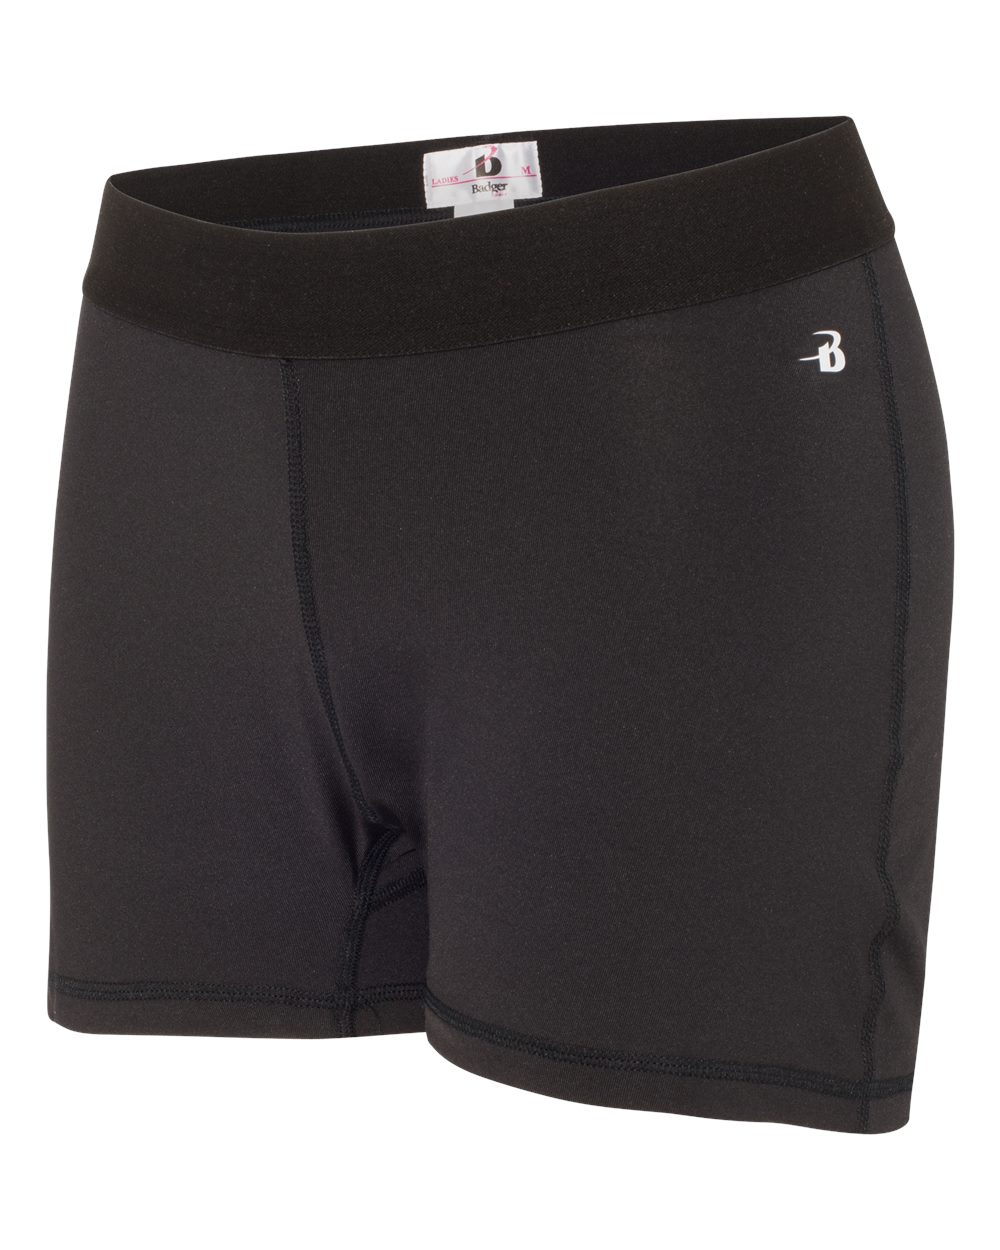 Badger 4629 - Pro-Compression Women's Shorts